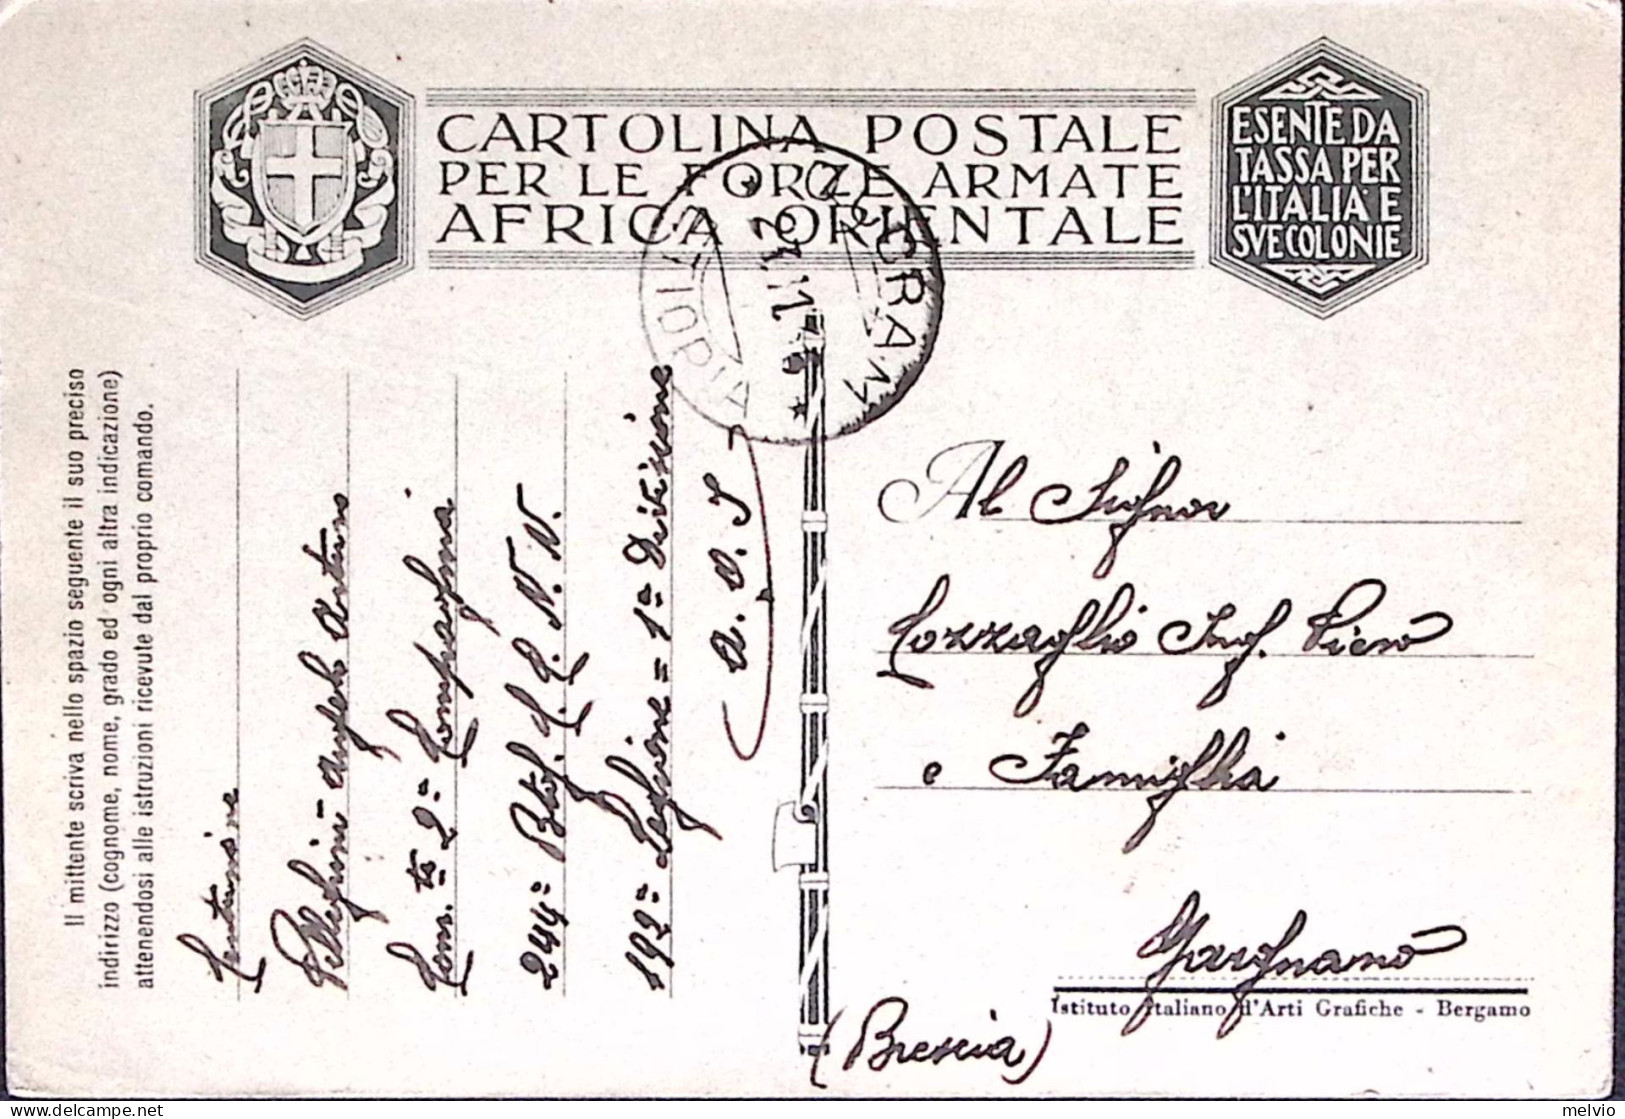 1935-Cartolina Franchigia Per AO Carta Africa Orientale Italiana Viaggiata - Afrique Orientale Italienne